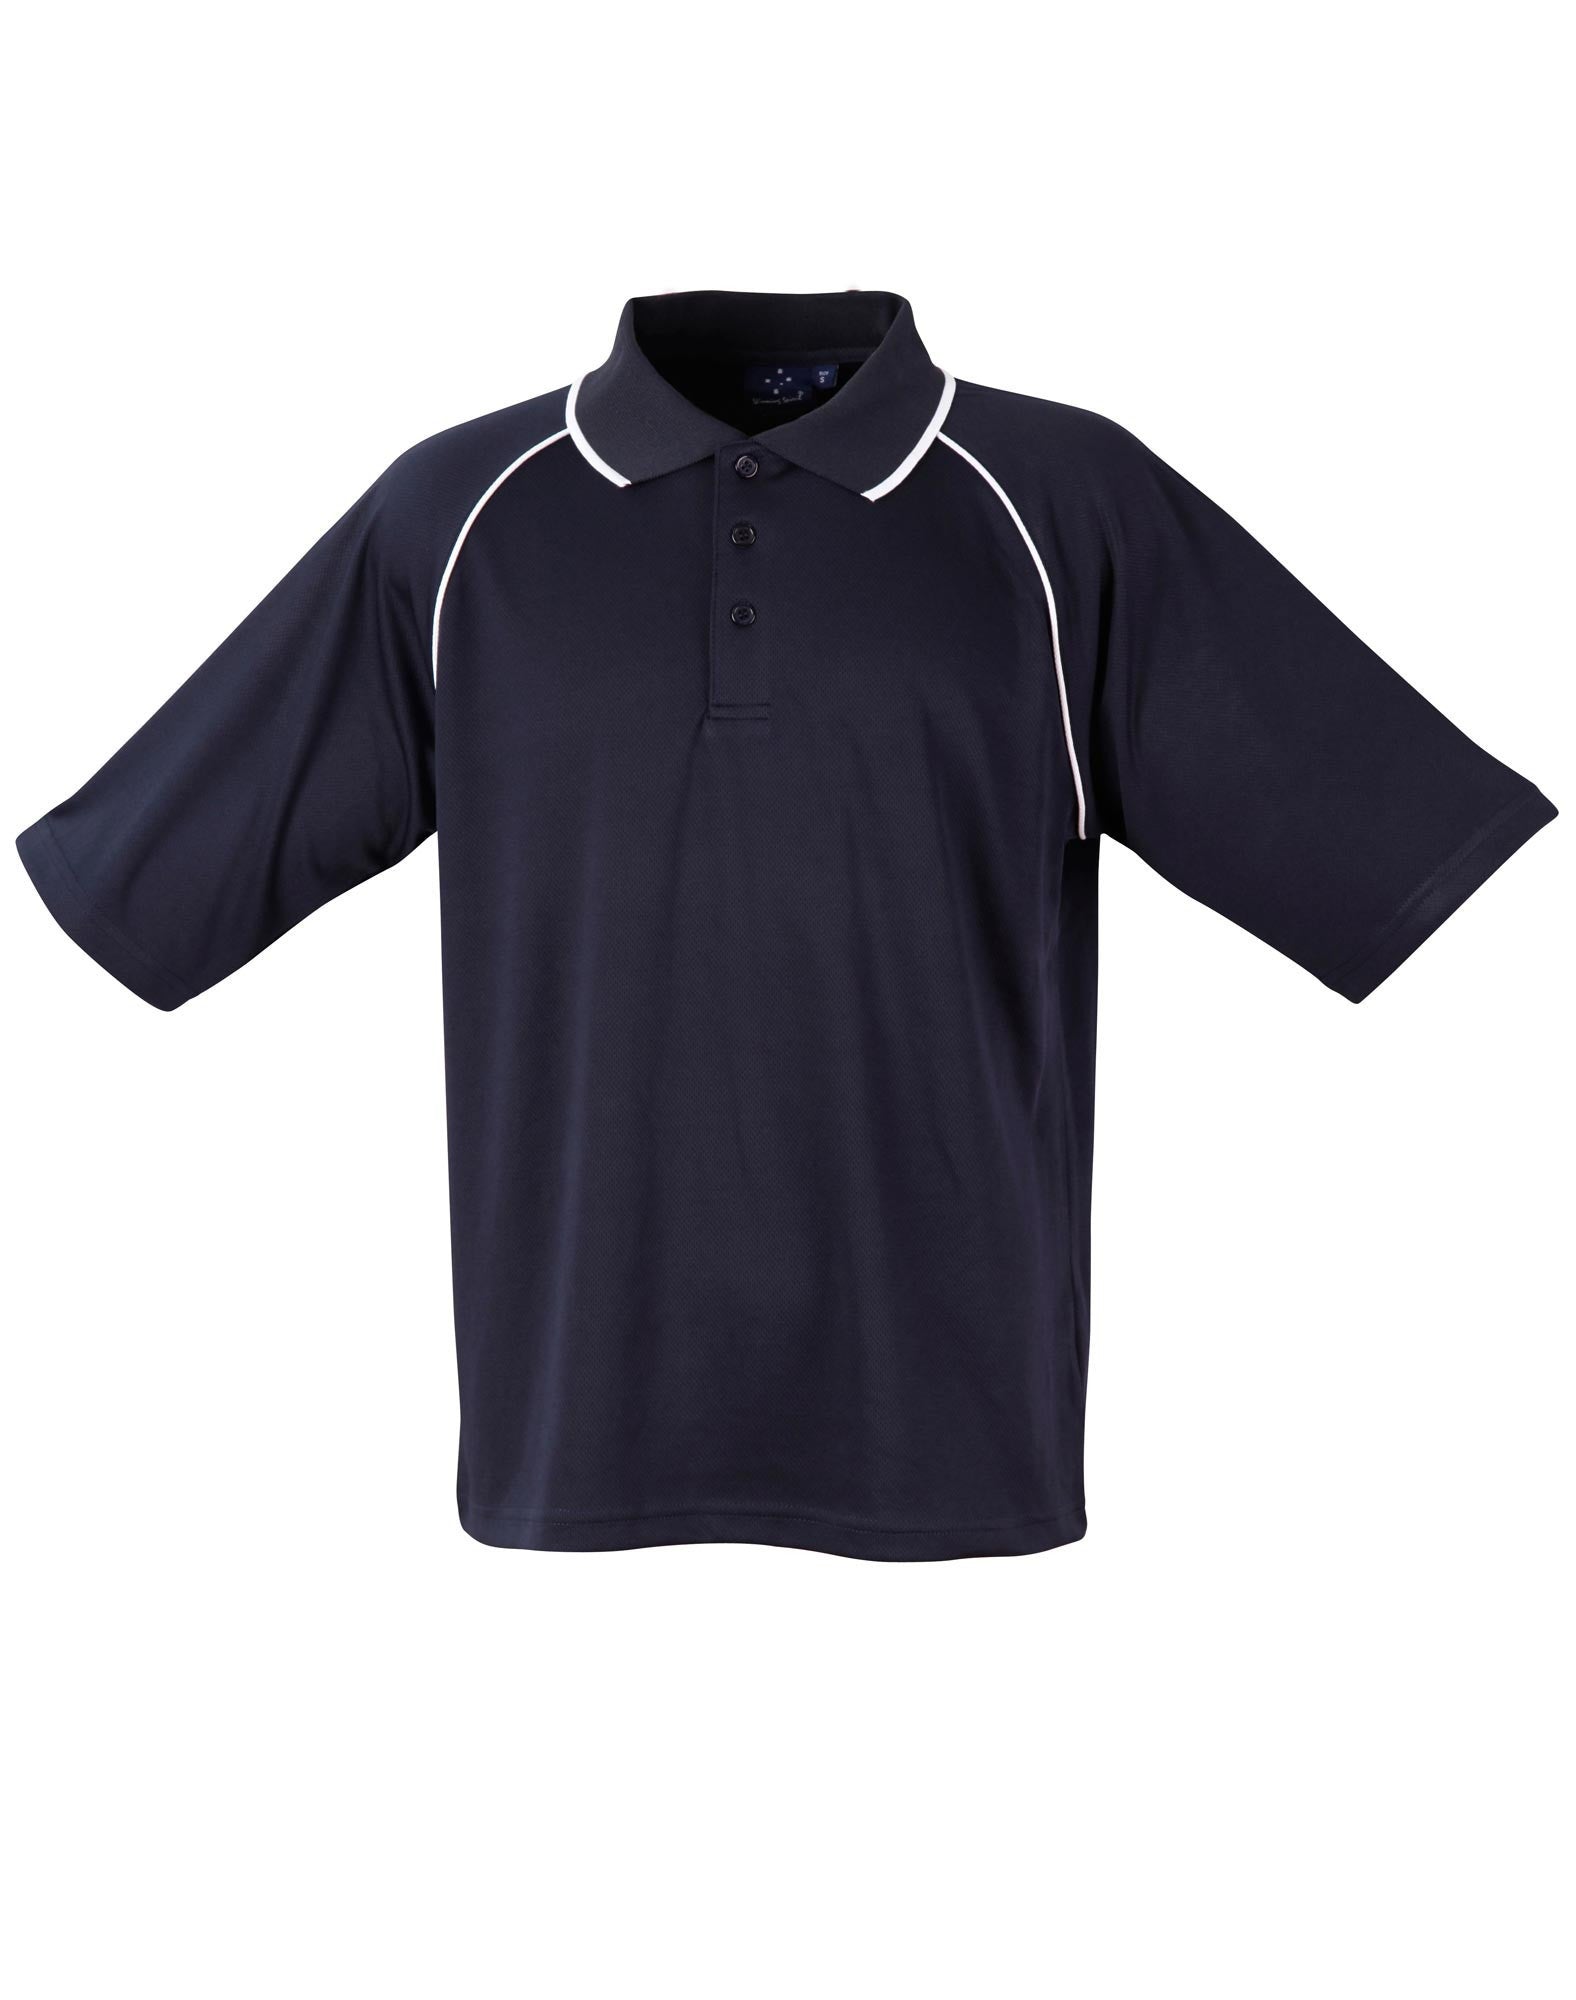 Winning Spirit Men's CoolDry® Raglan Short Sleeve Contrast Polo 1st(12 Colour)-(PS20)